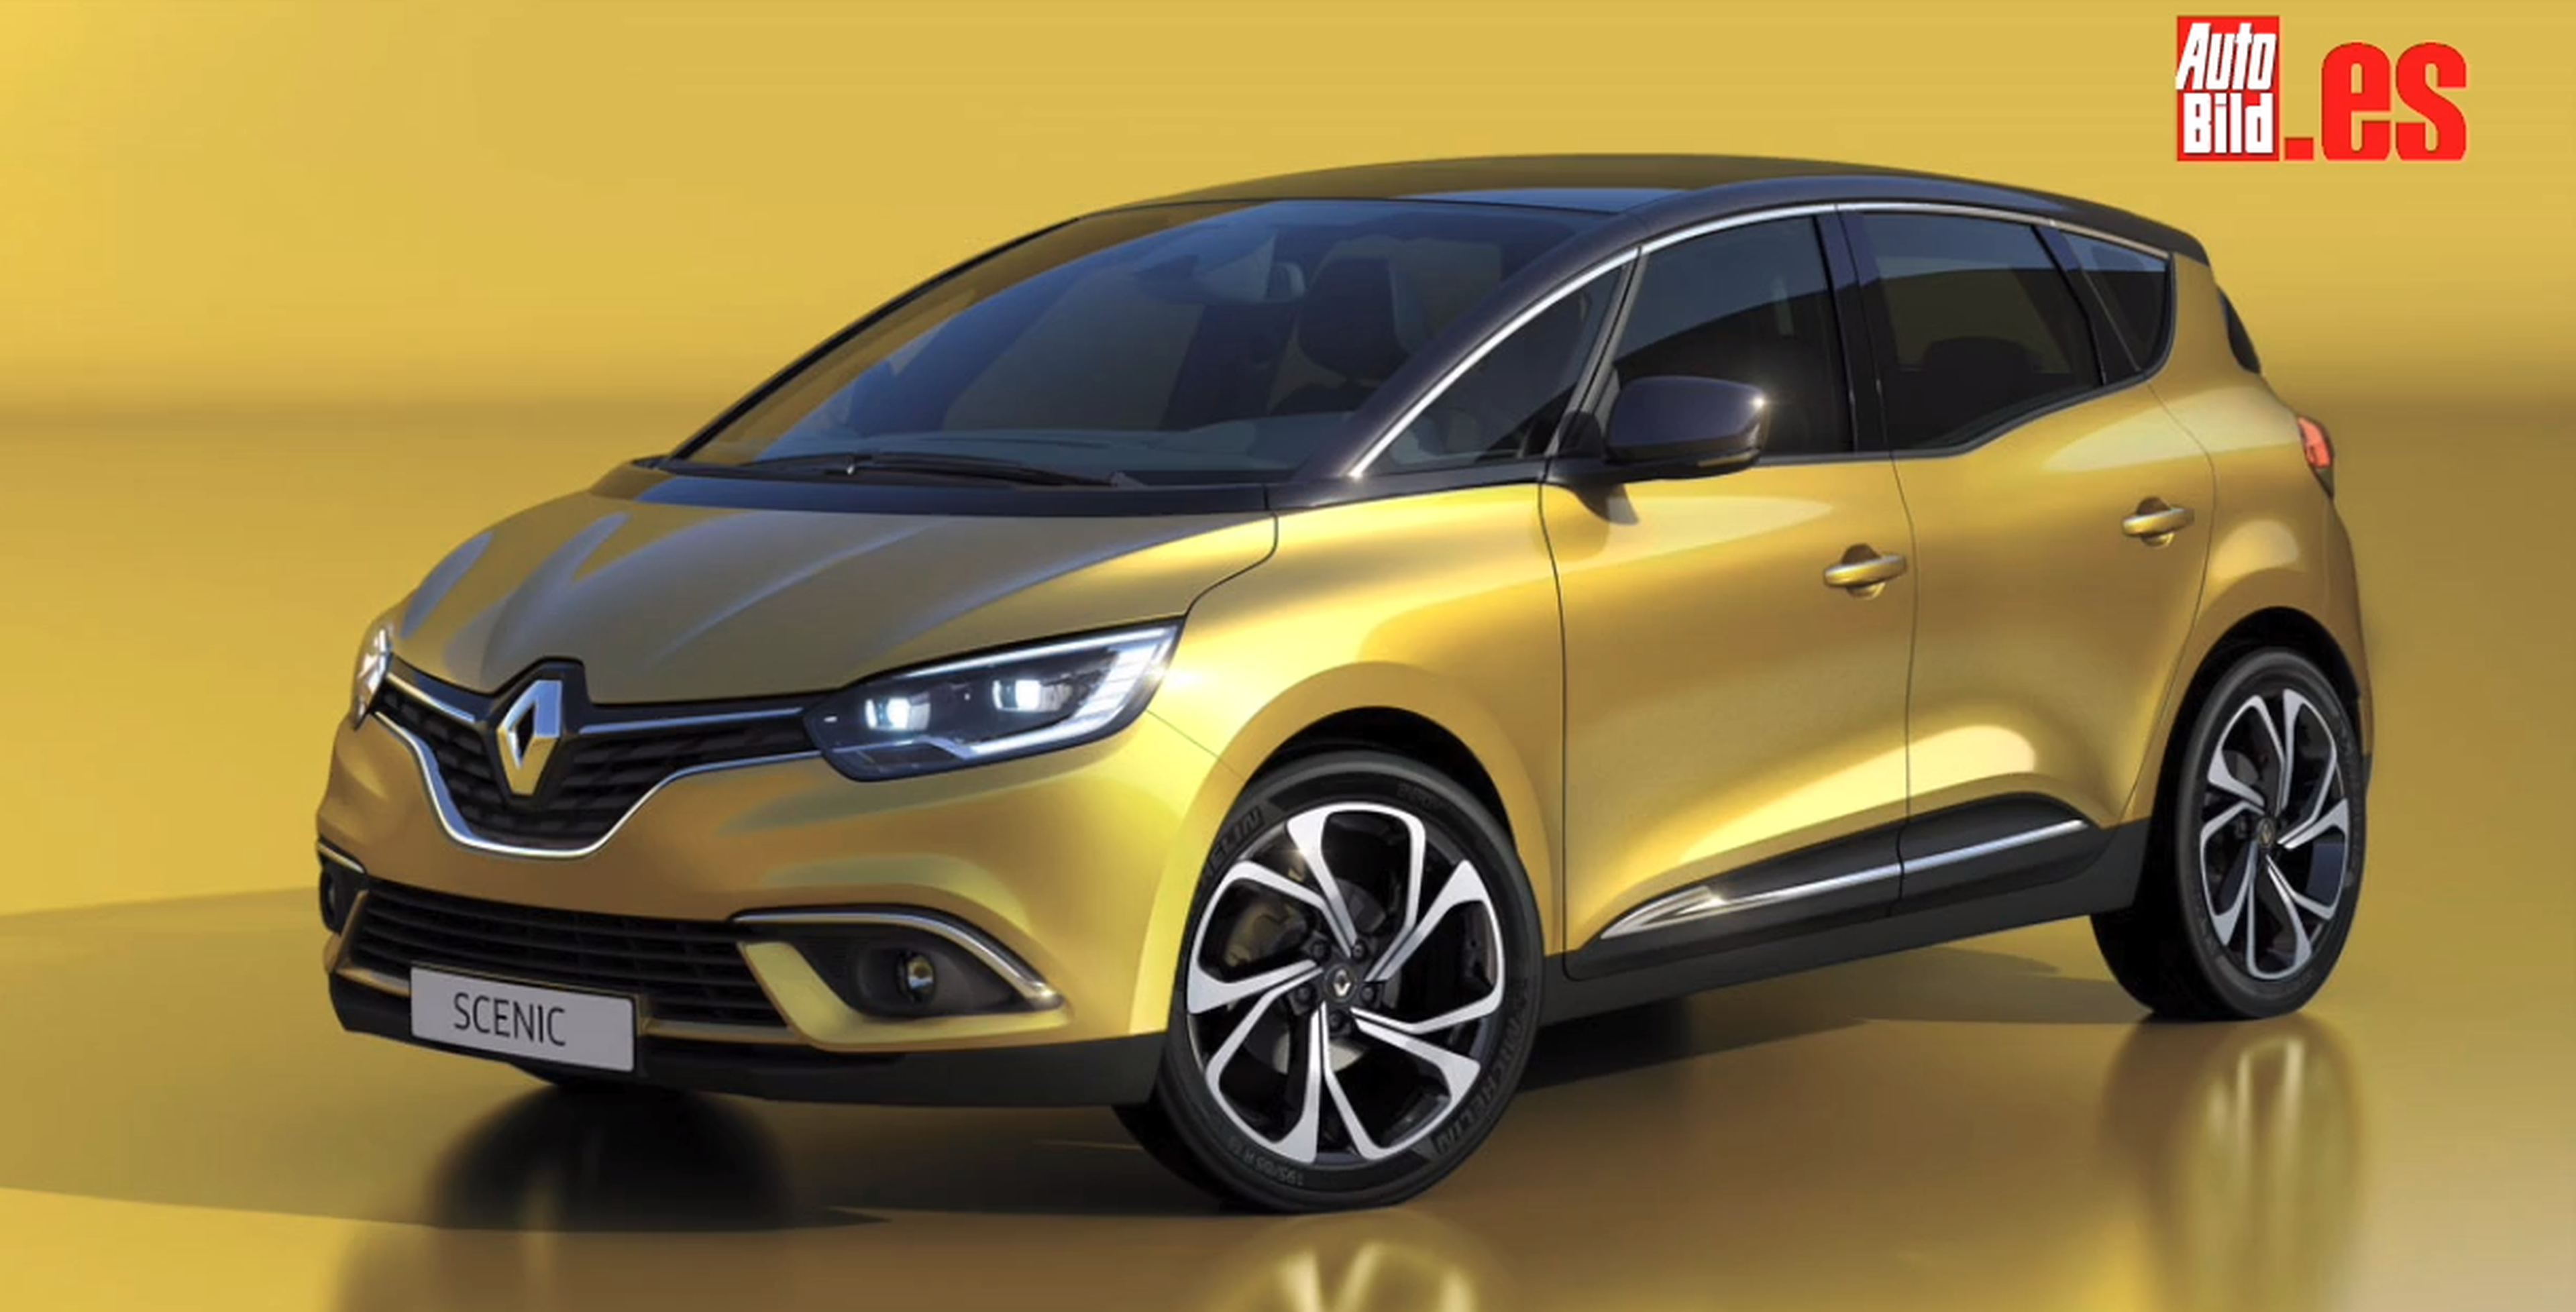 Renault Scénic 2016, aspecto dinámico e interior placentero